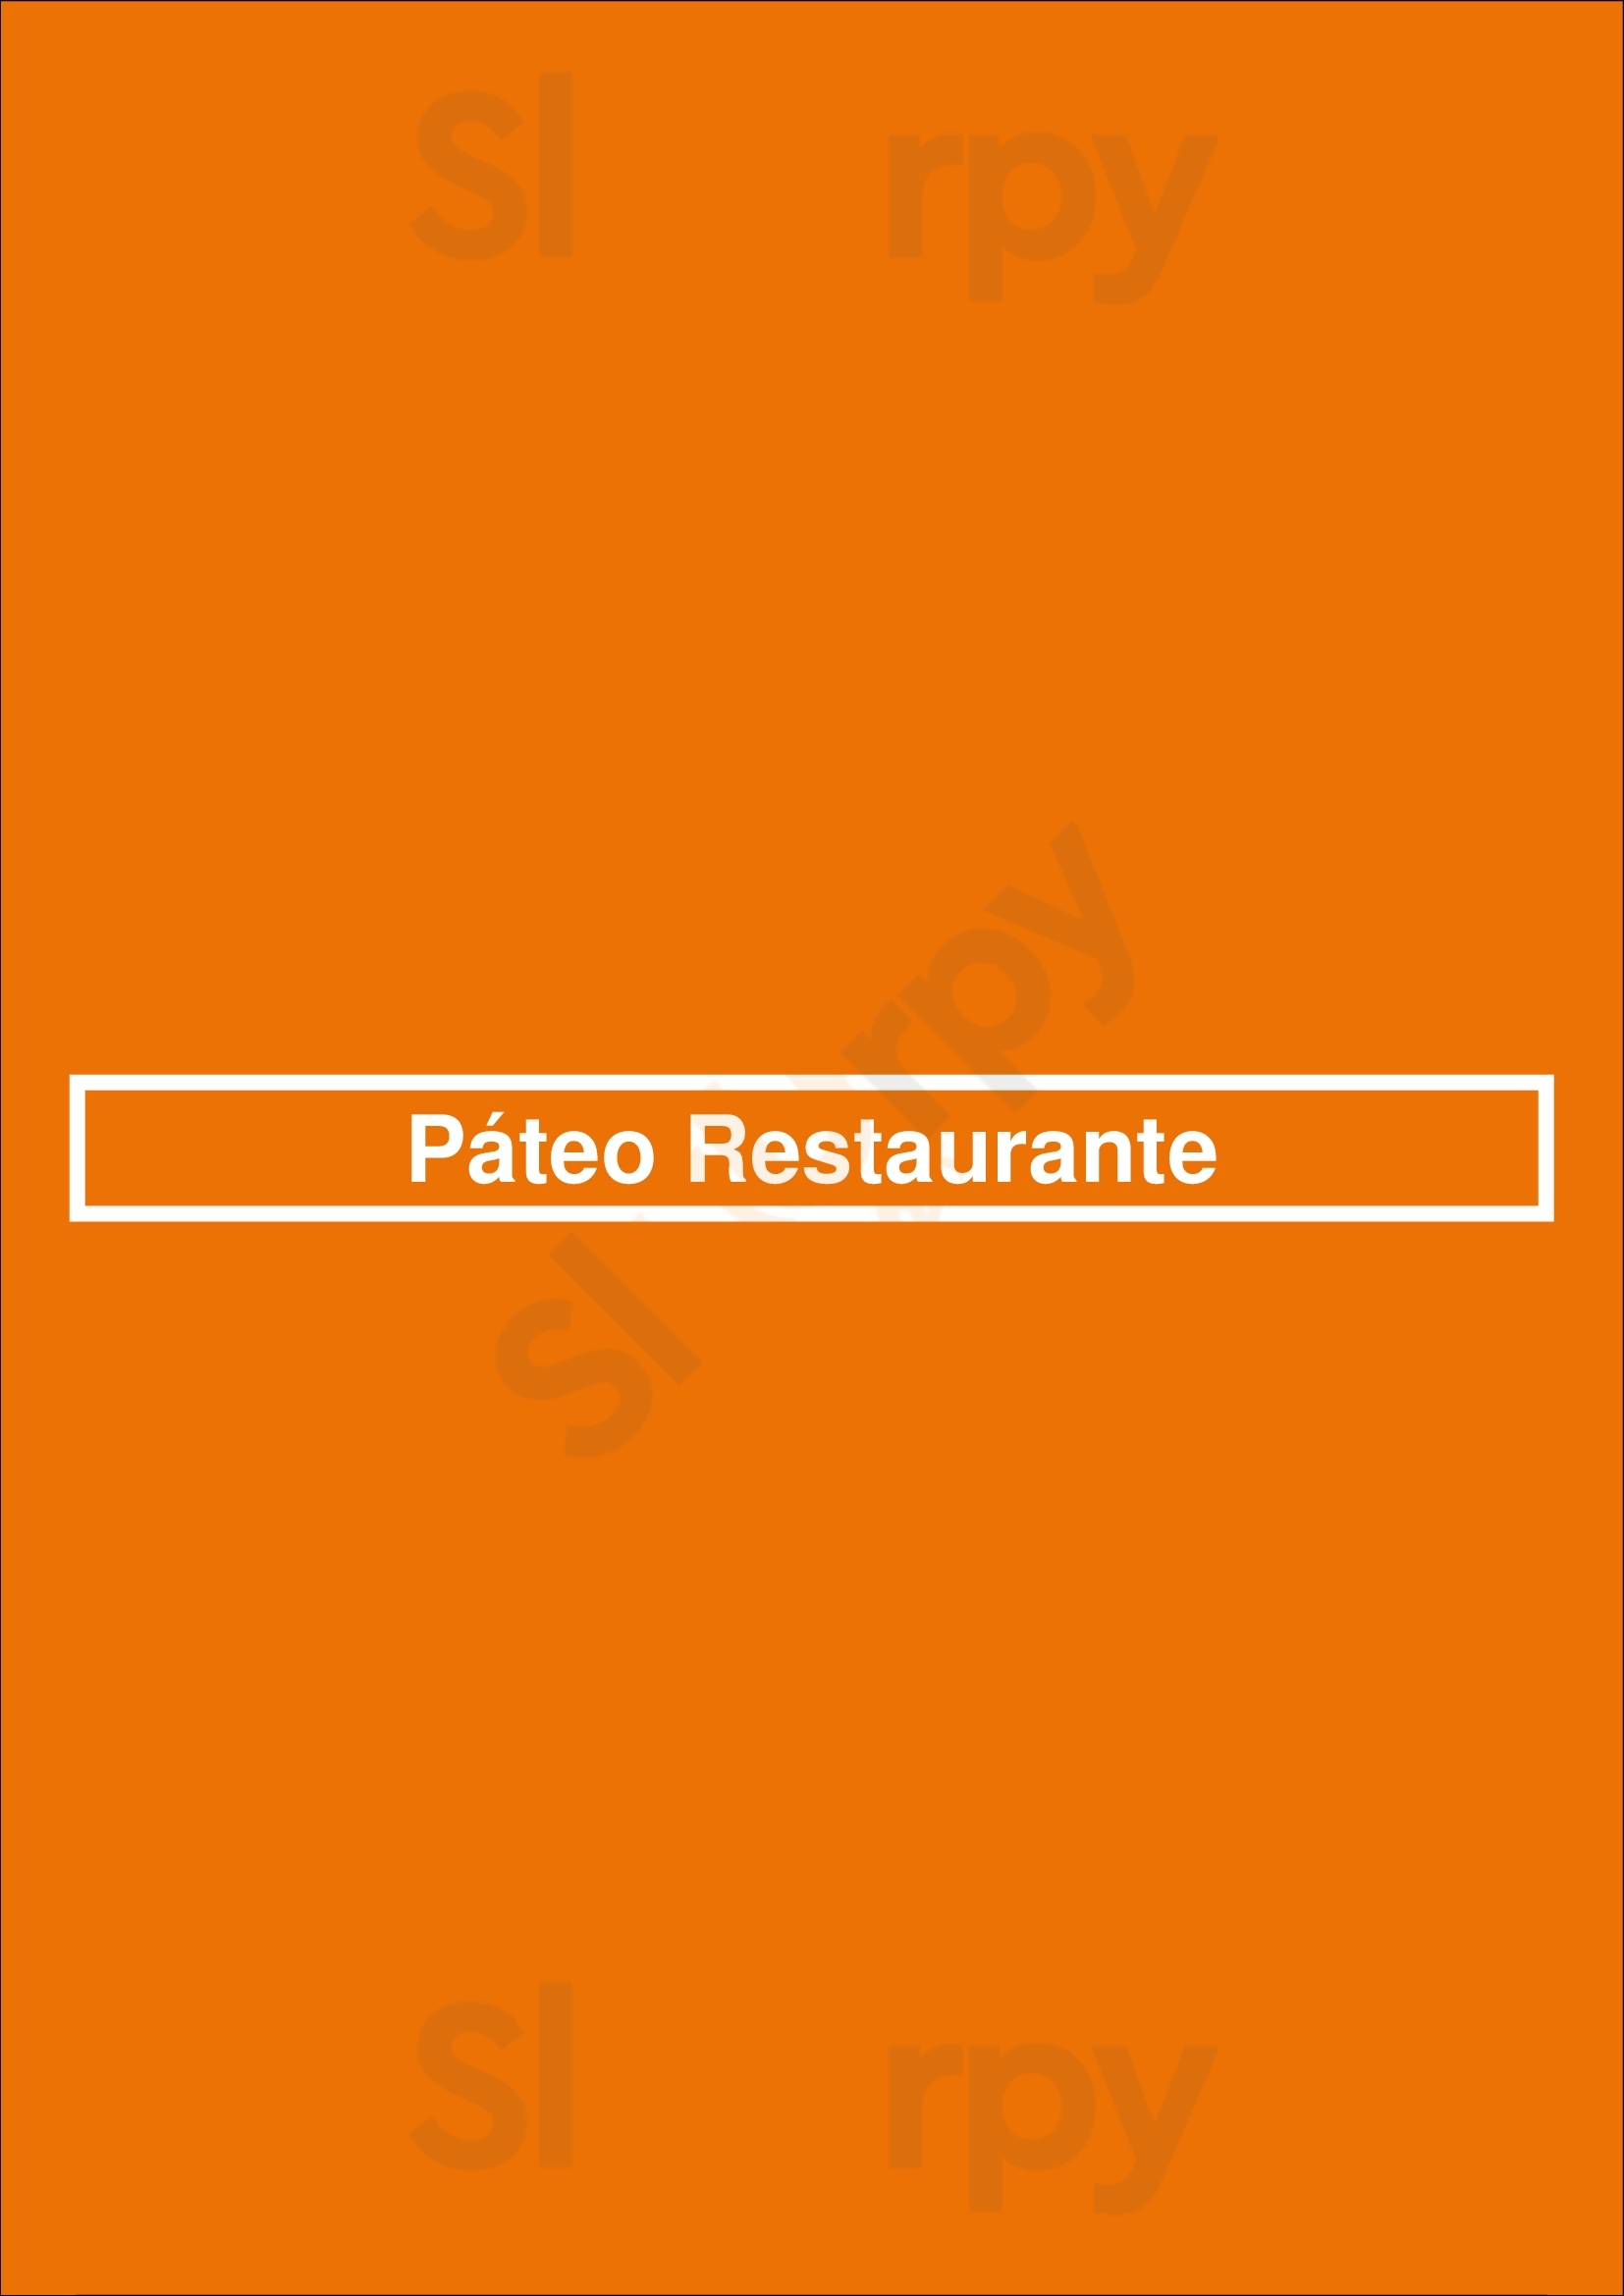 Páteo Restaurante Lisboa Menu - 1